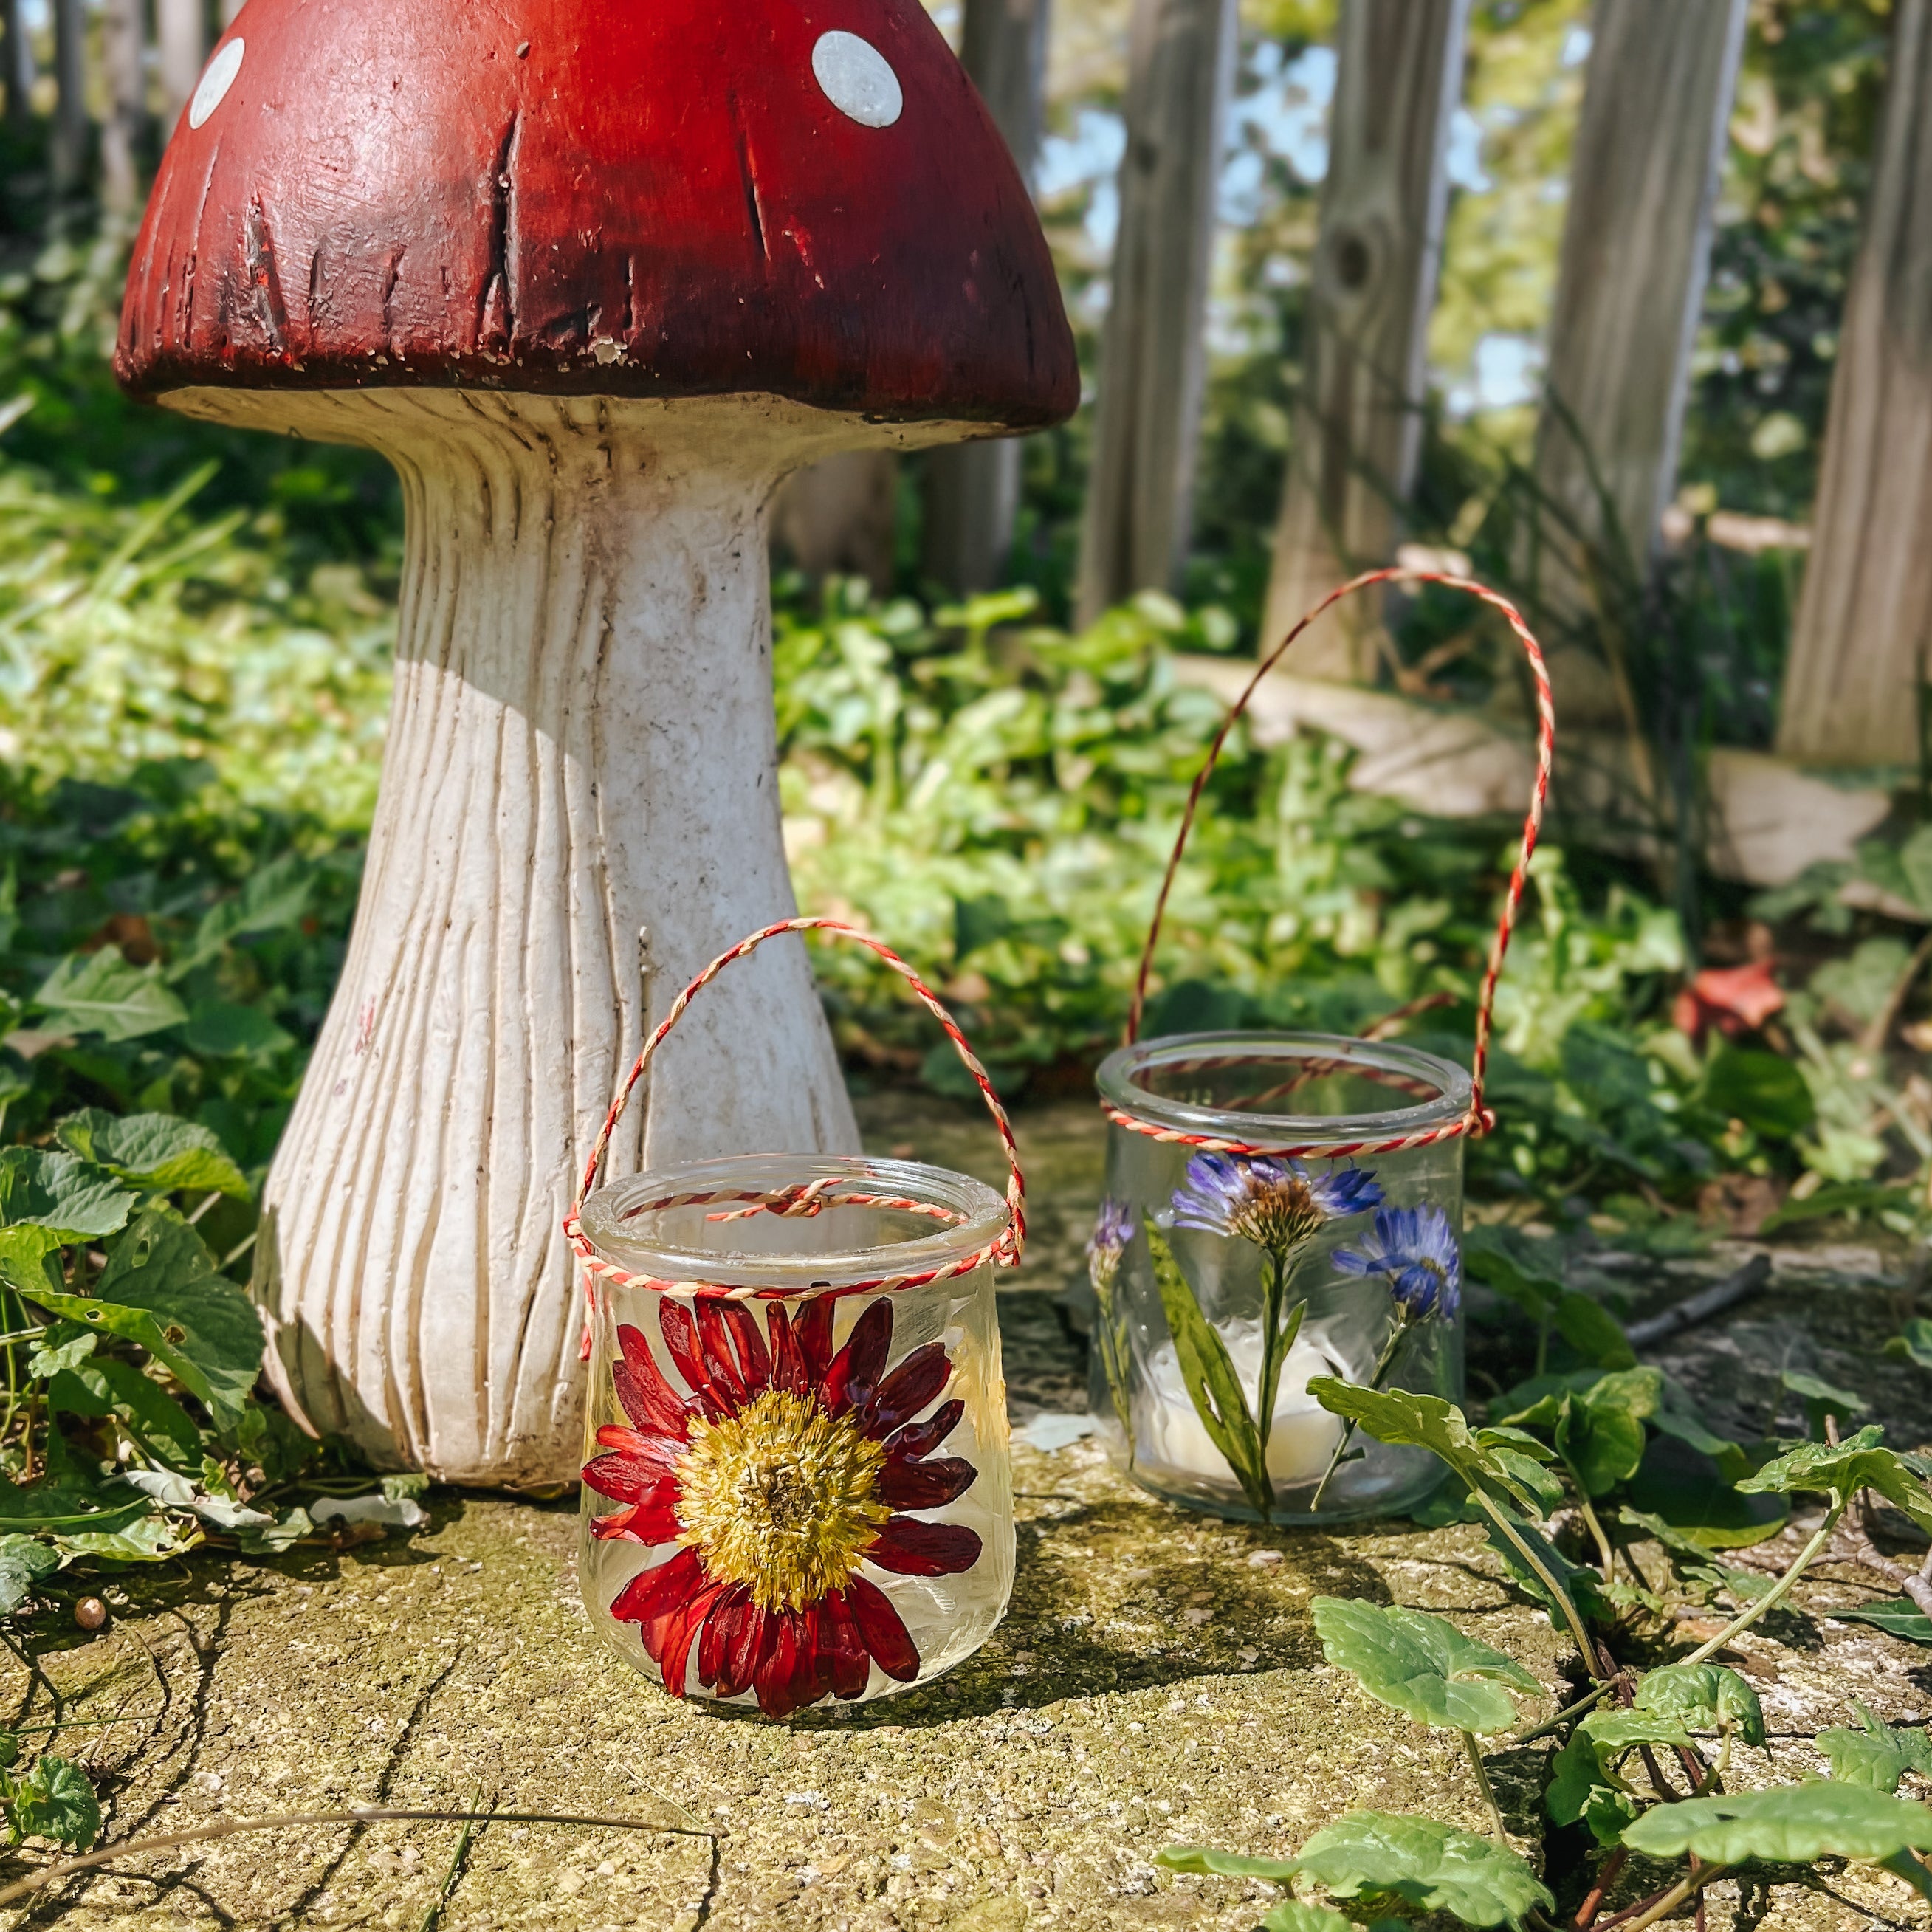 A pressed flower lantern sits outside next to a mushroom.